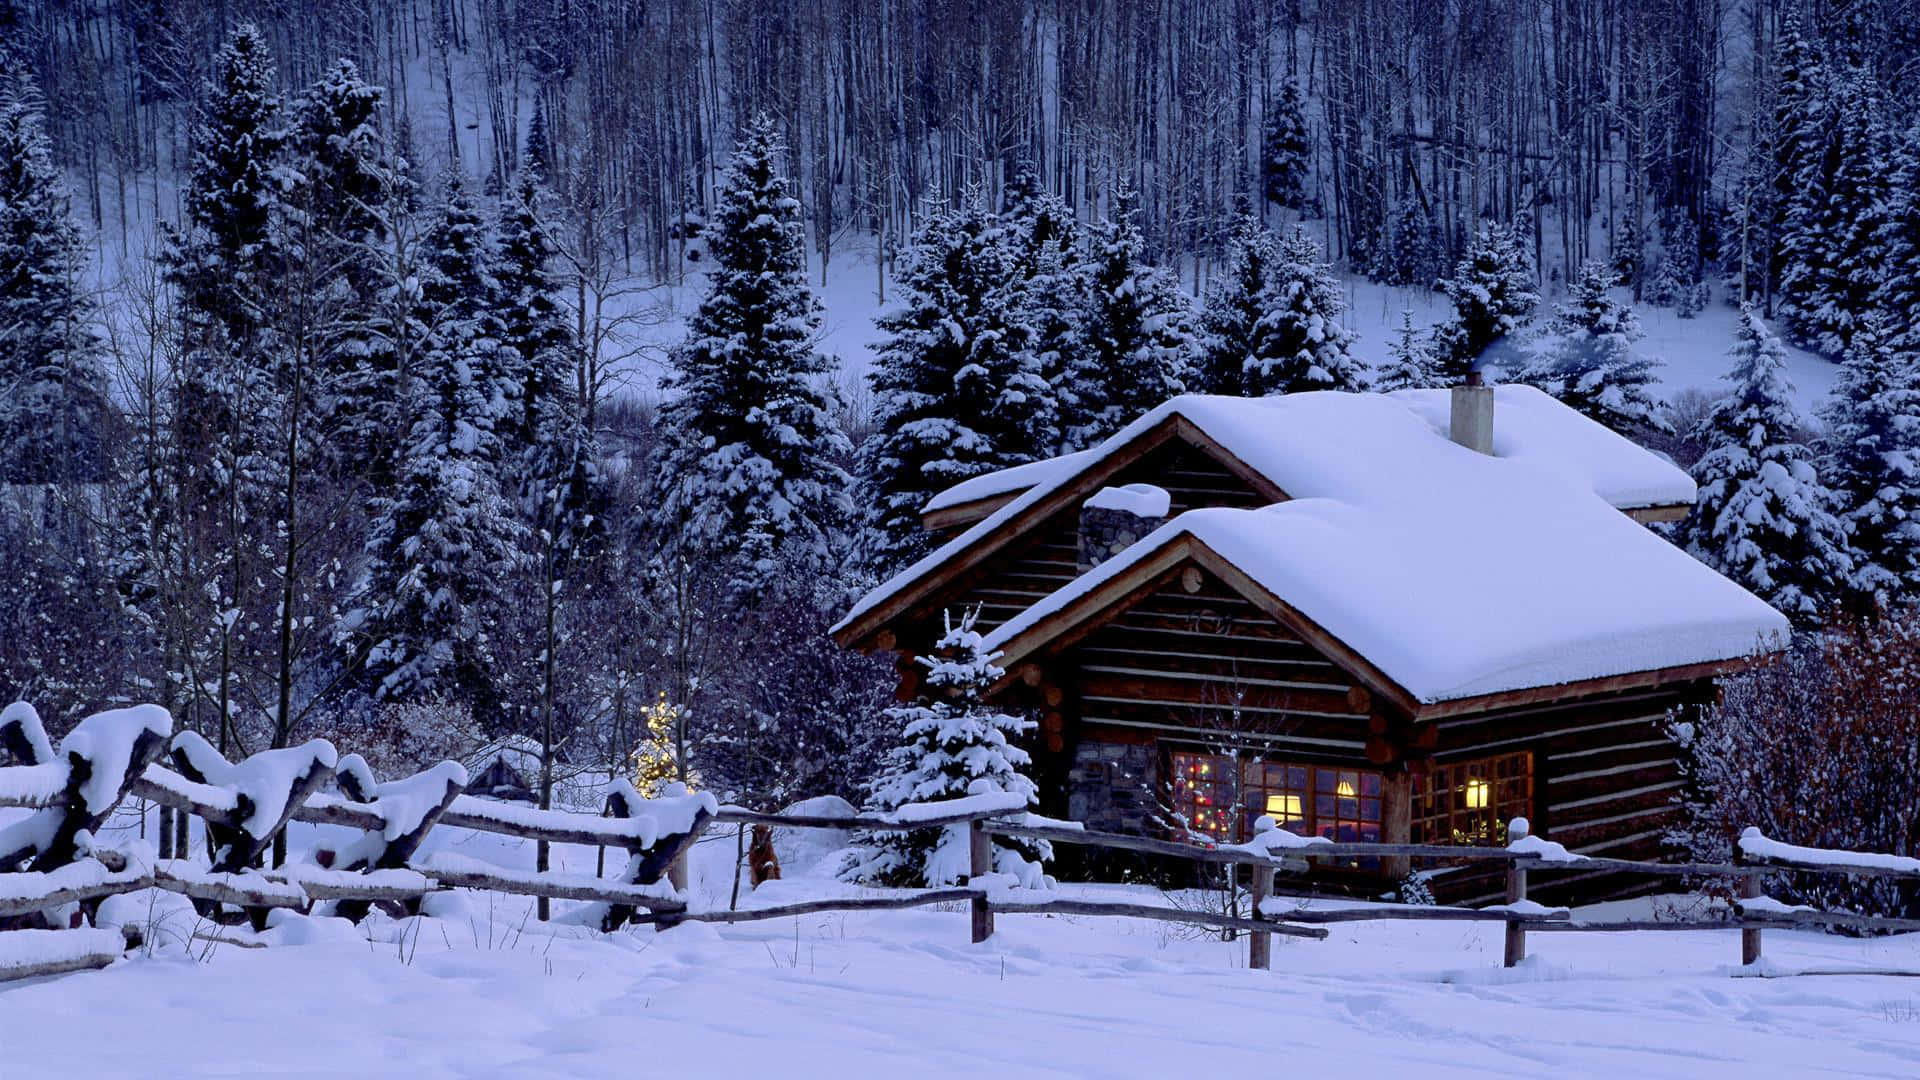 Cozy Wooden Cabin Winter Desktop Wallpaper